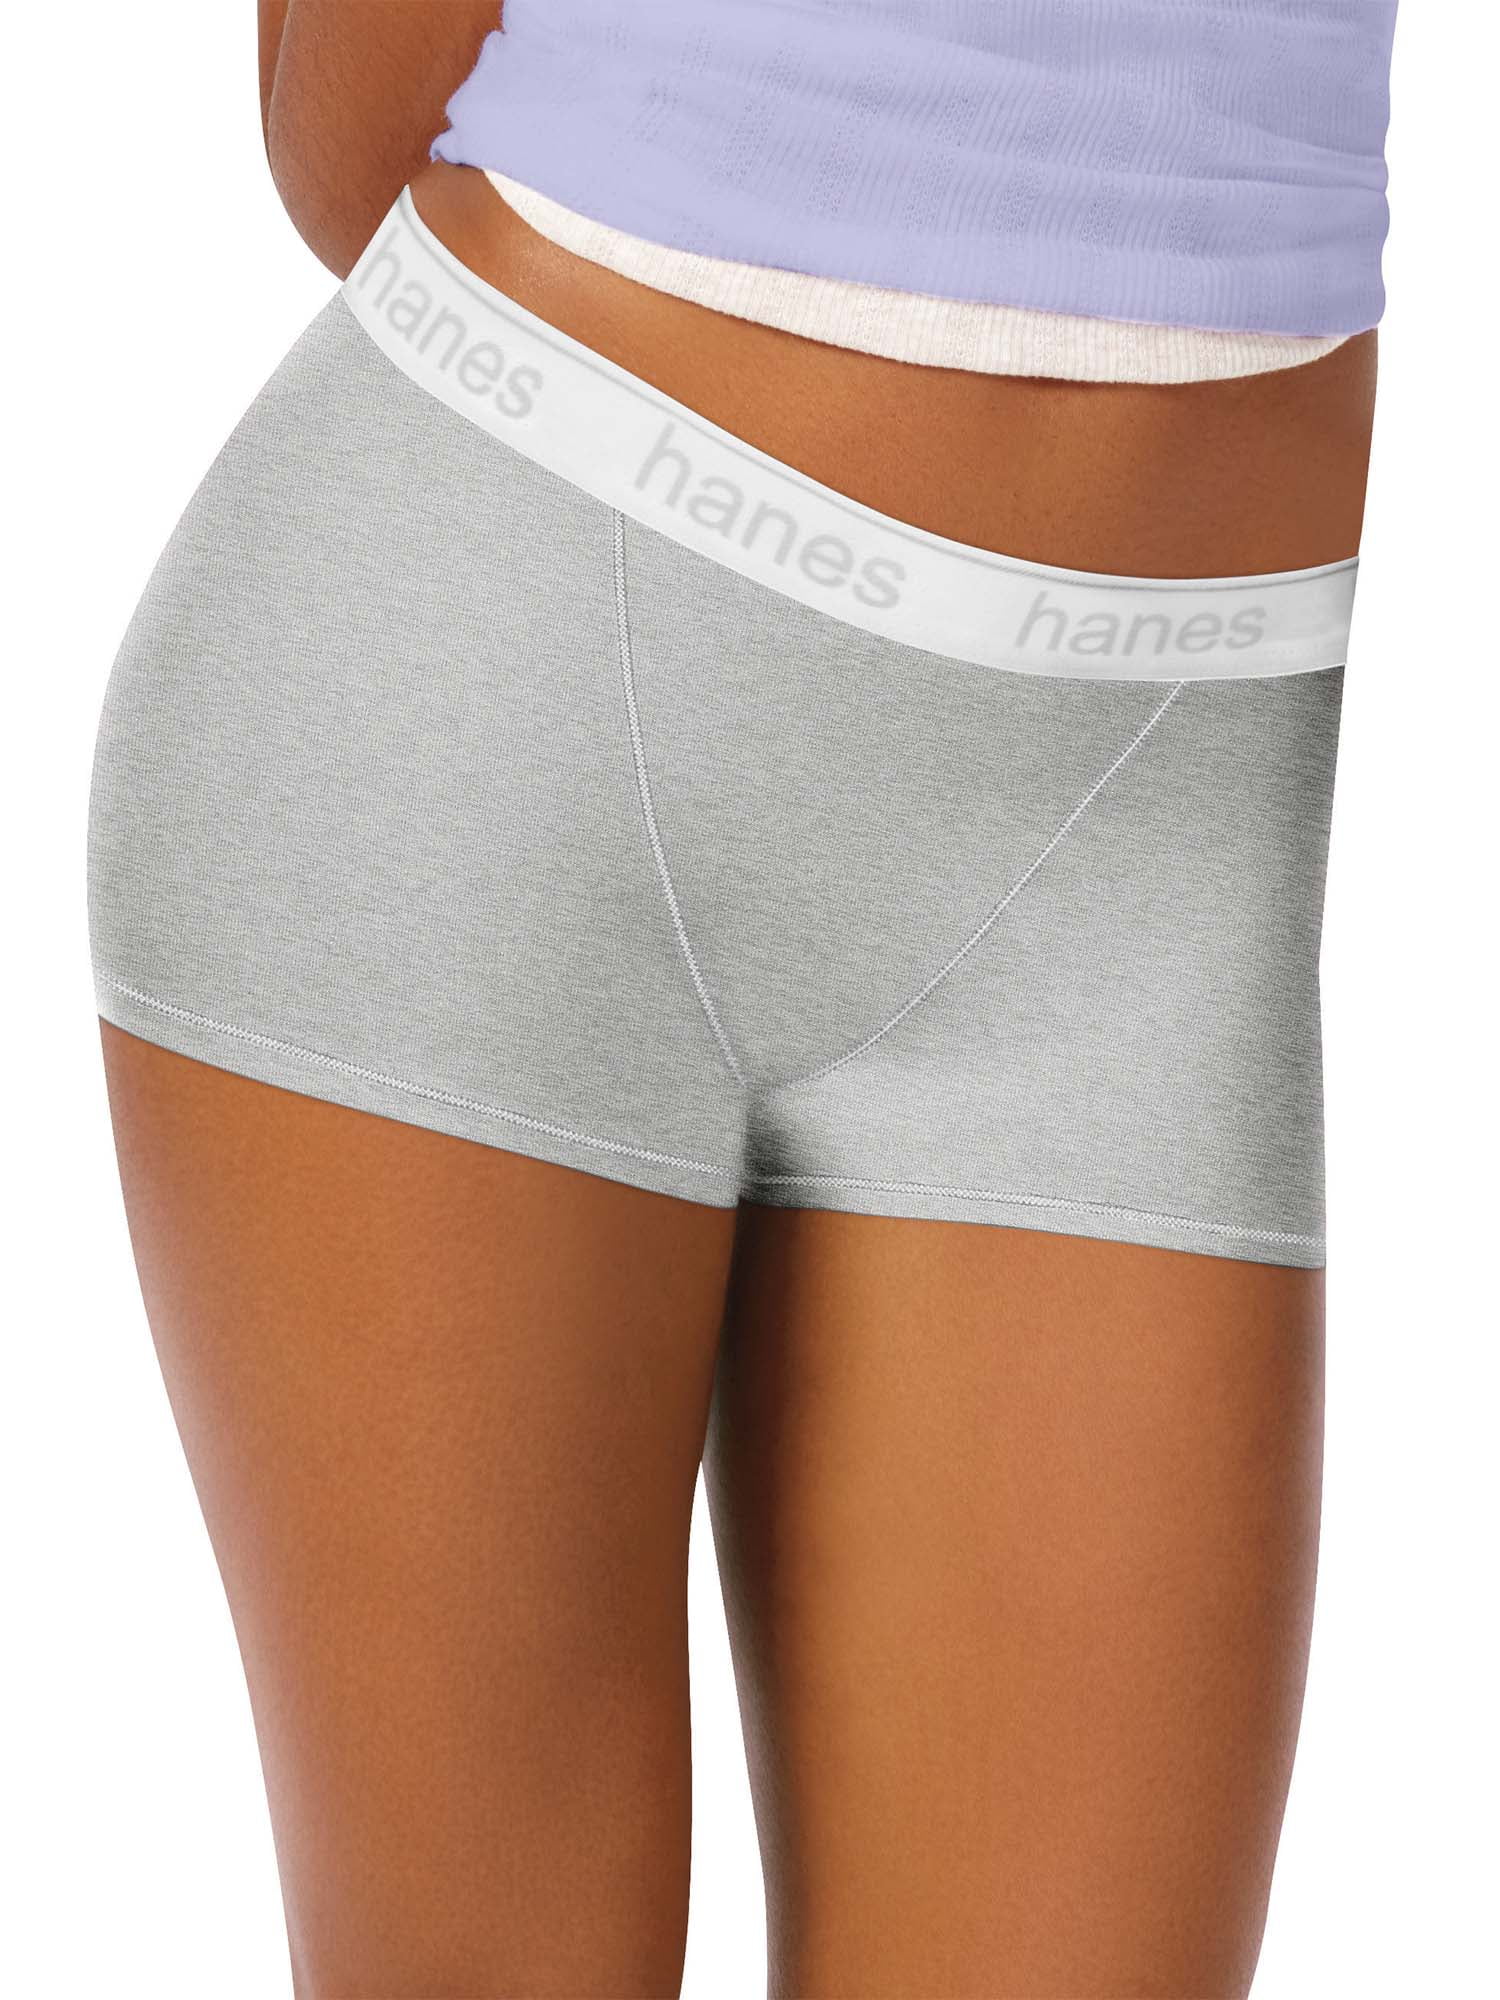 Hanes Women's Ultimate Boyfriend Classics Boyshort Panties, 3-Pack 